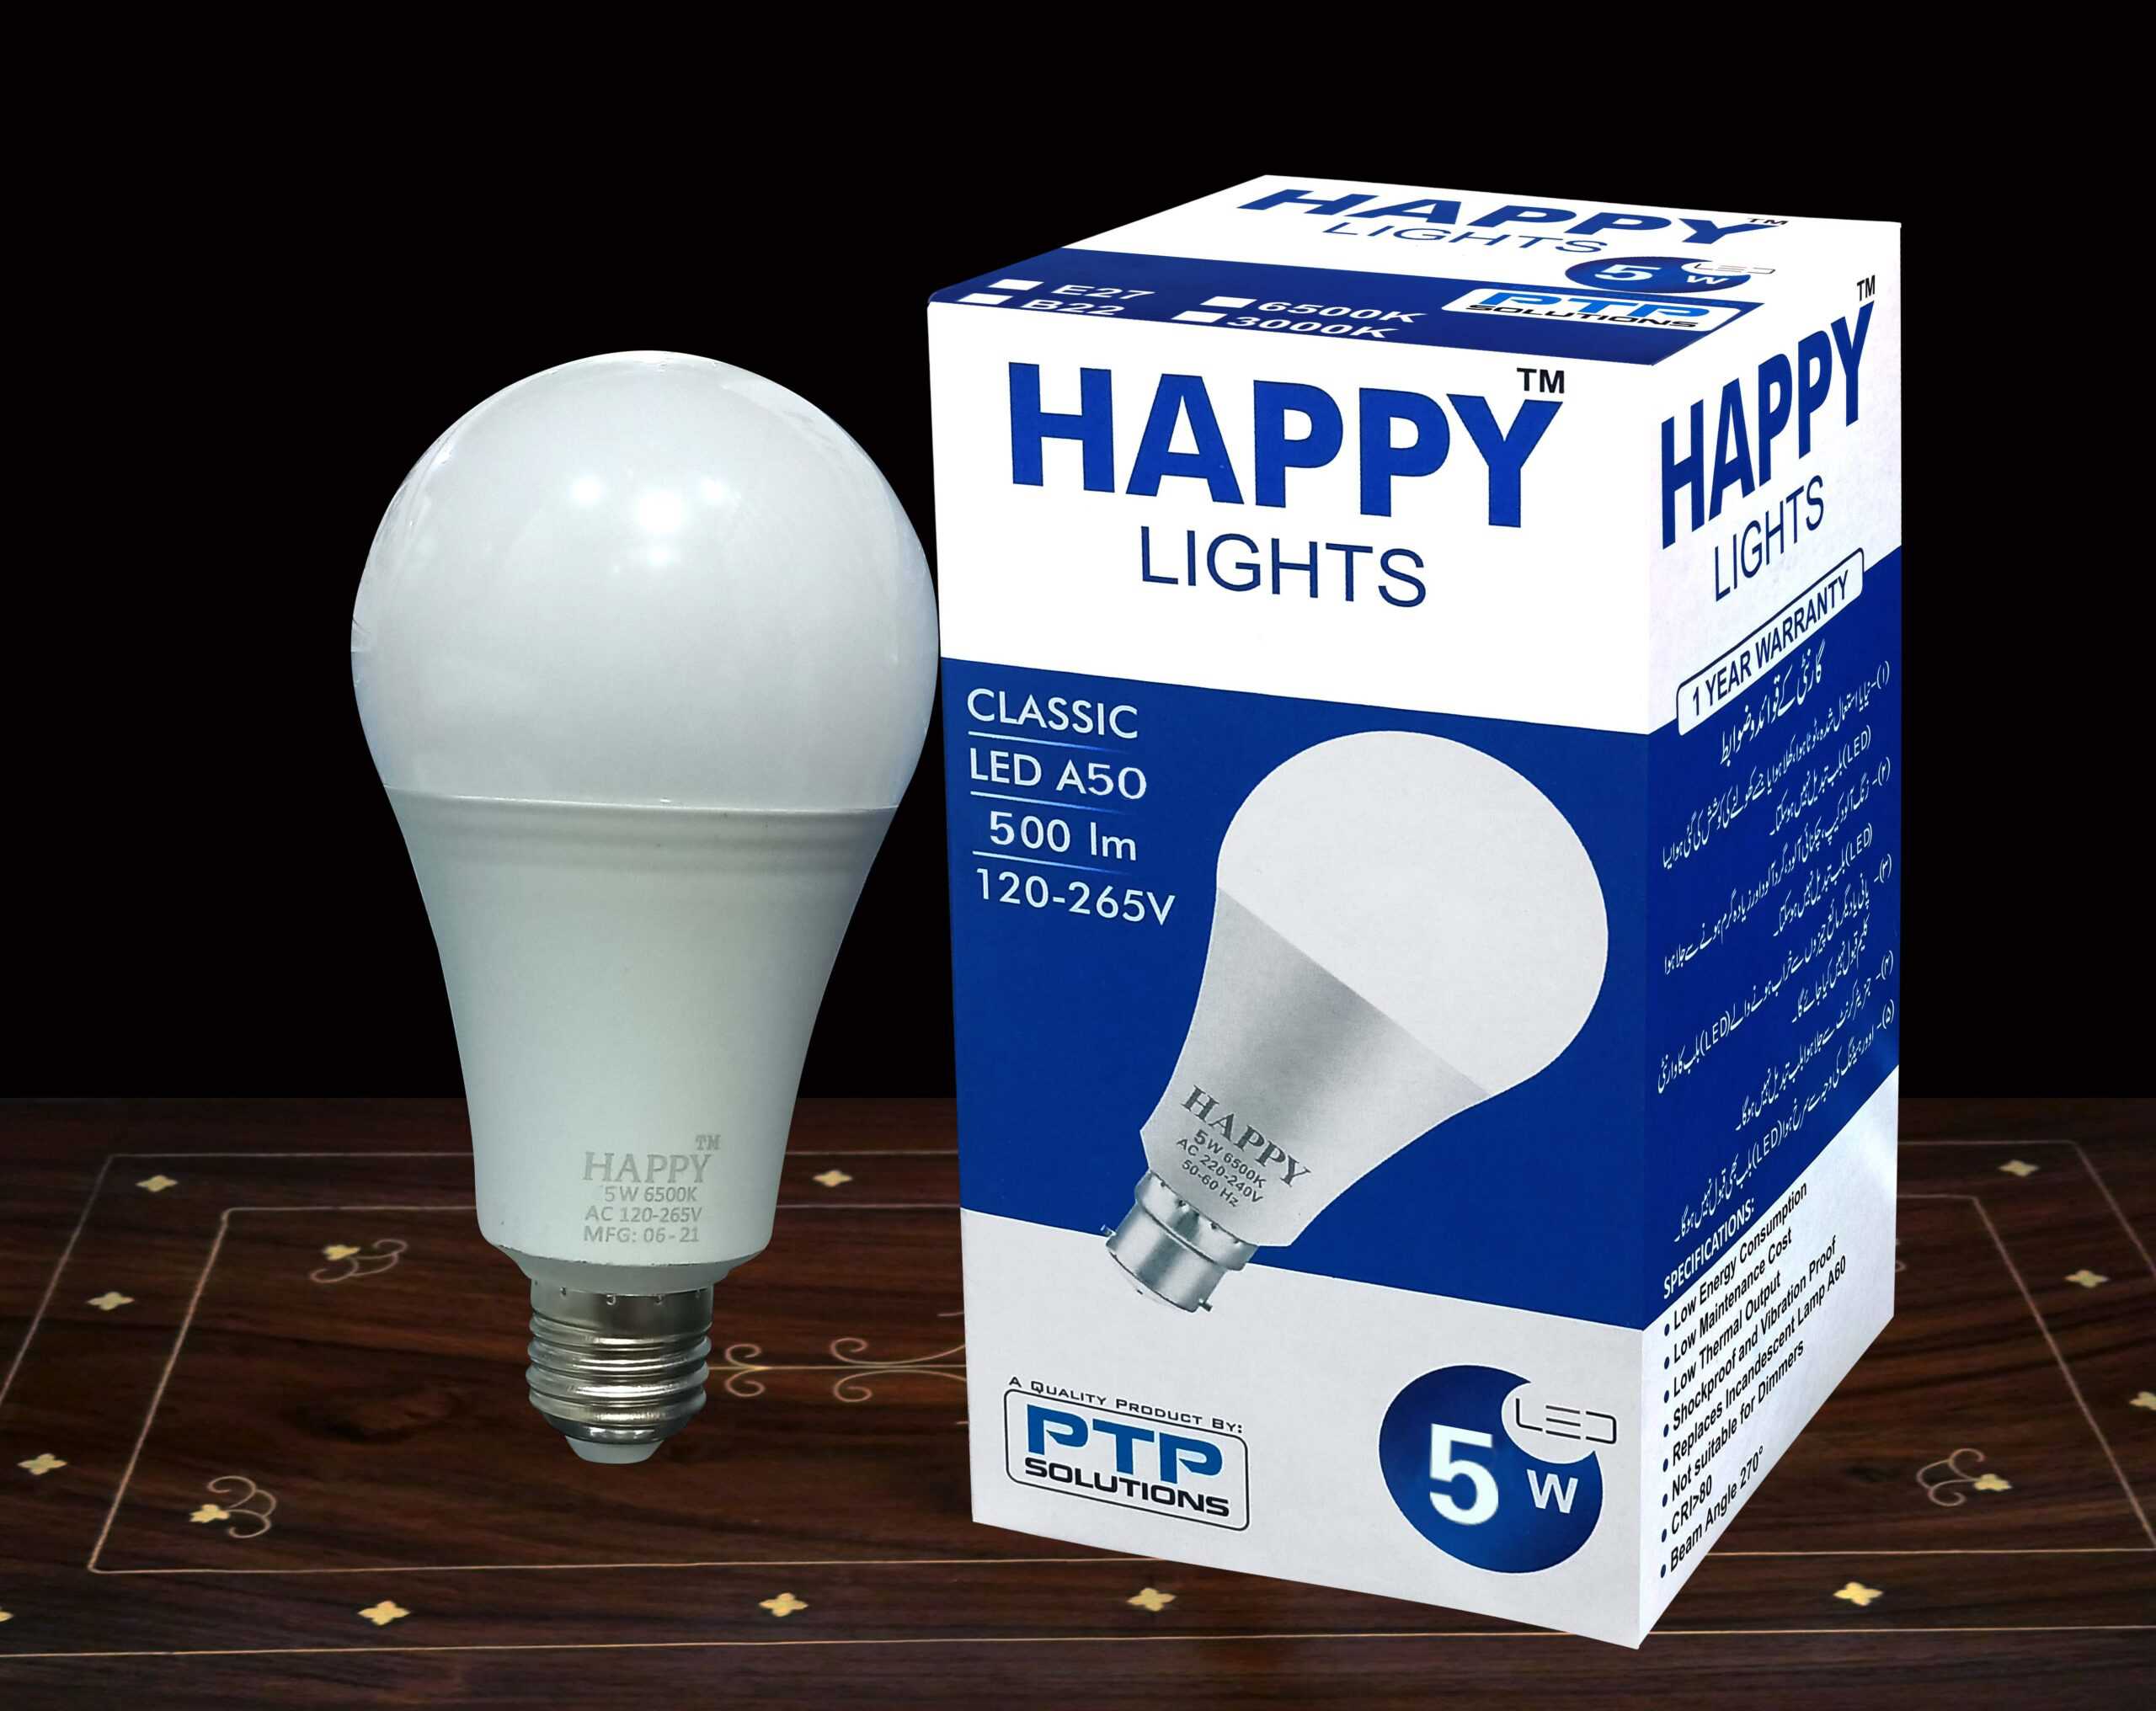 5 WAAT LED Bulb Price in Pakistan | My Happy Store